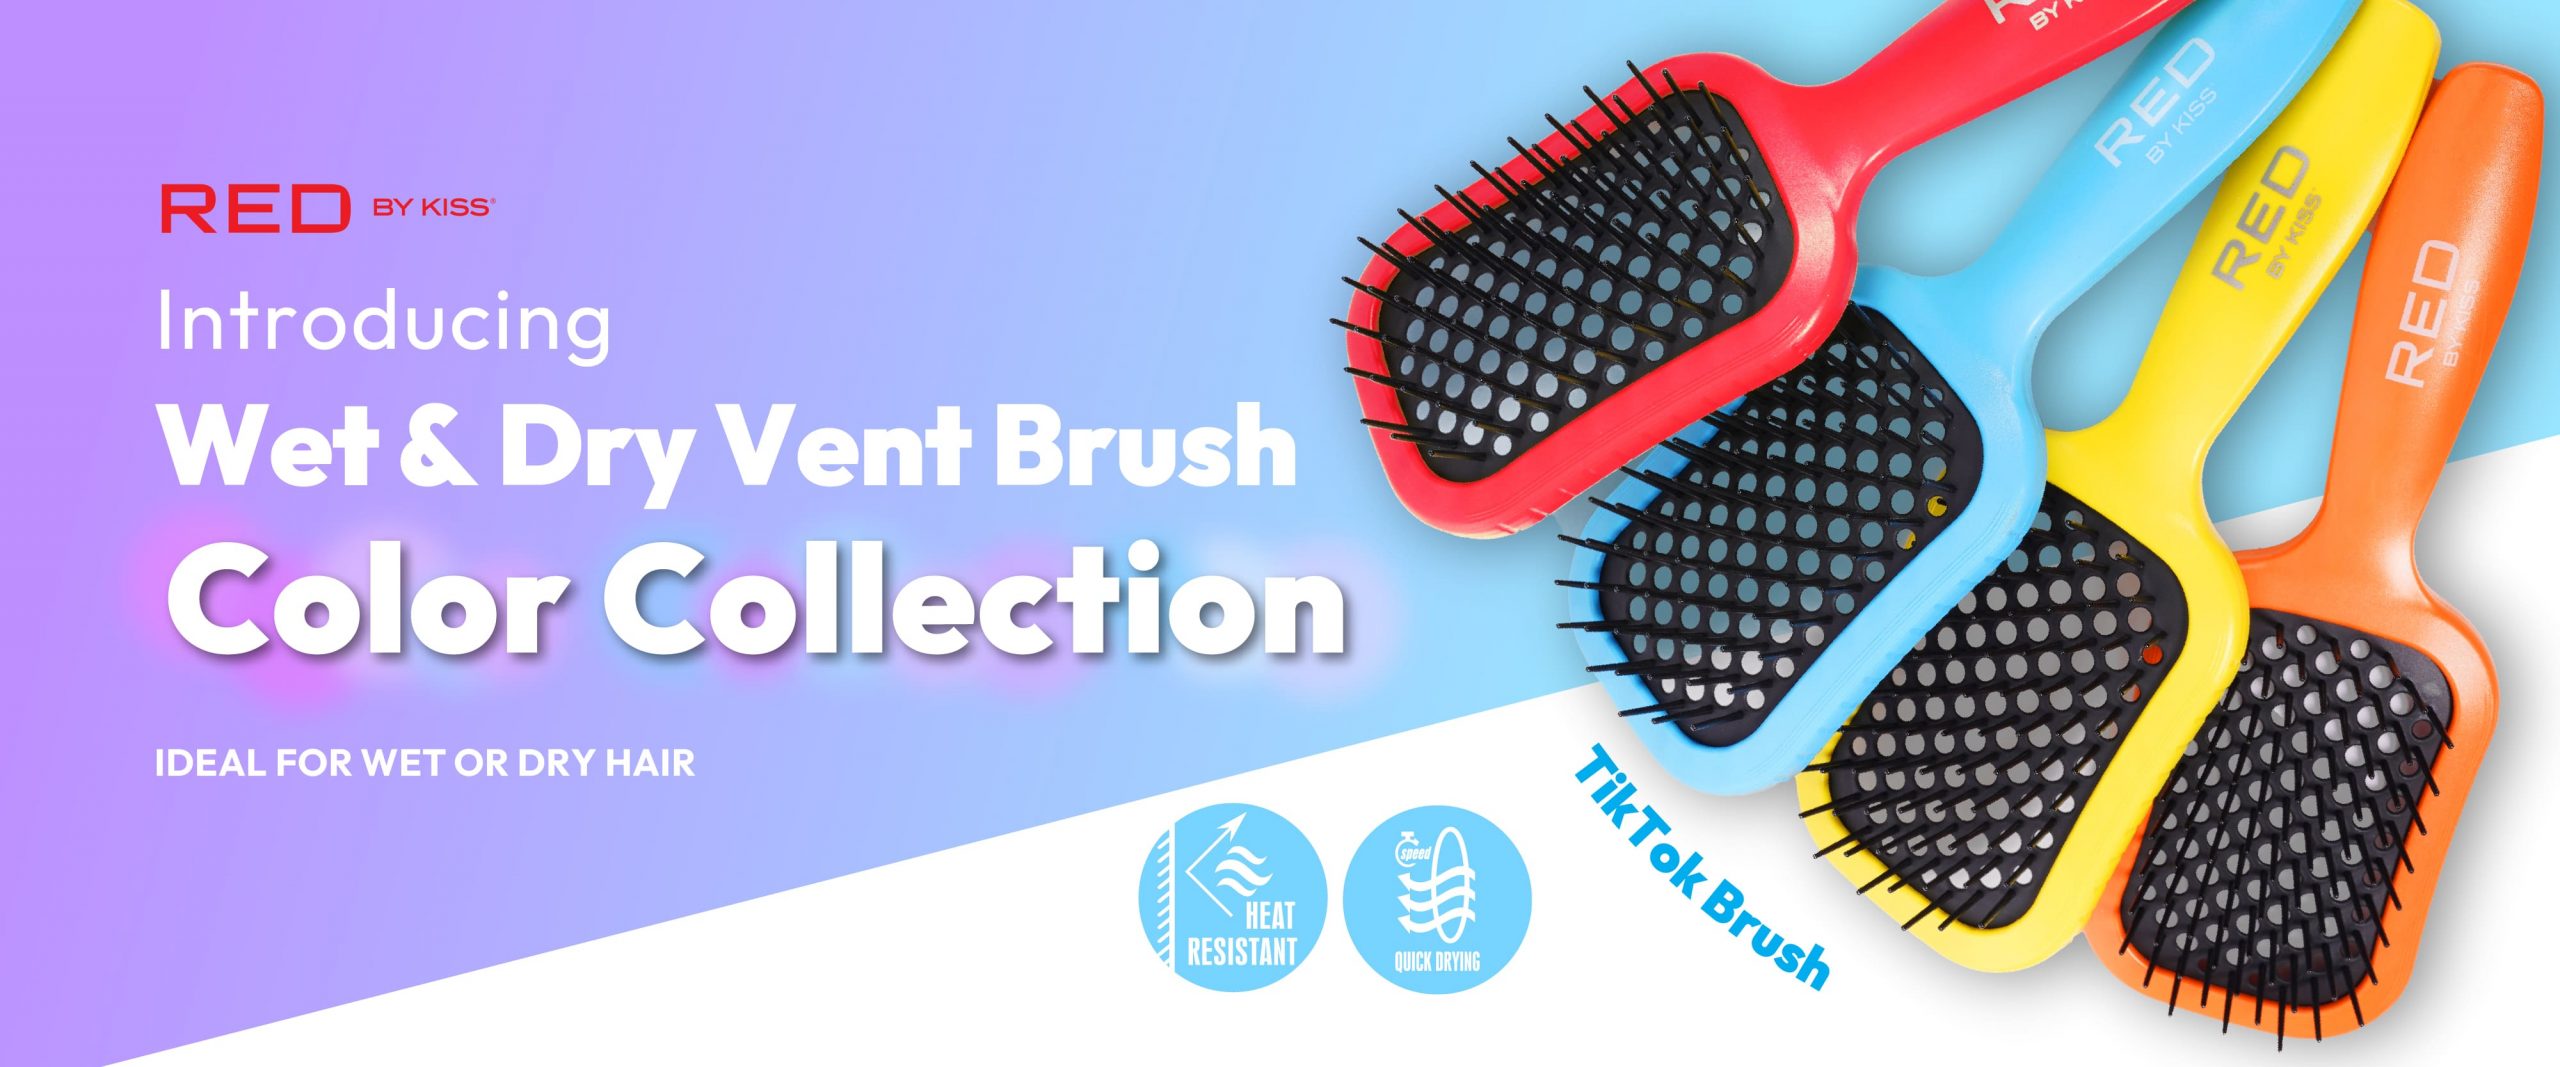 Go to Wet & Dry Vent Brush